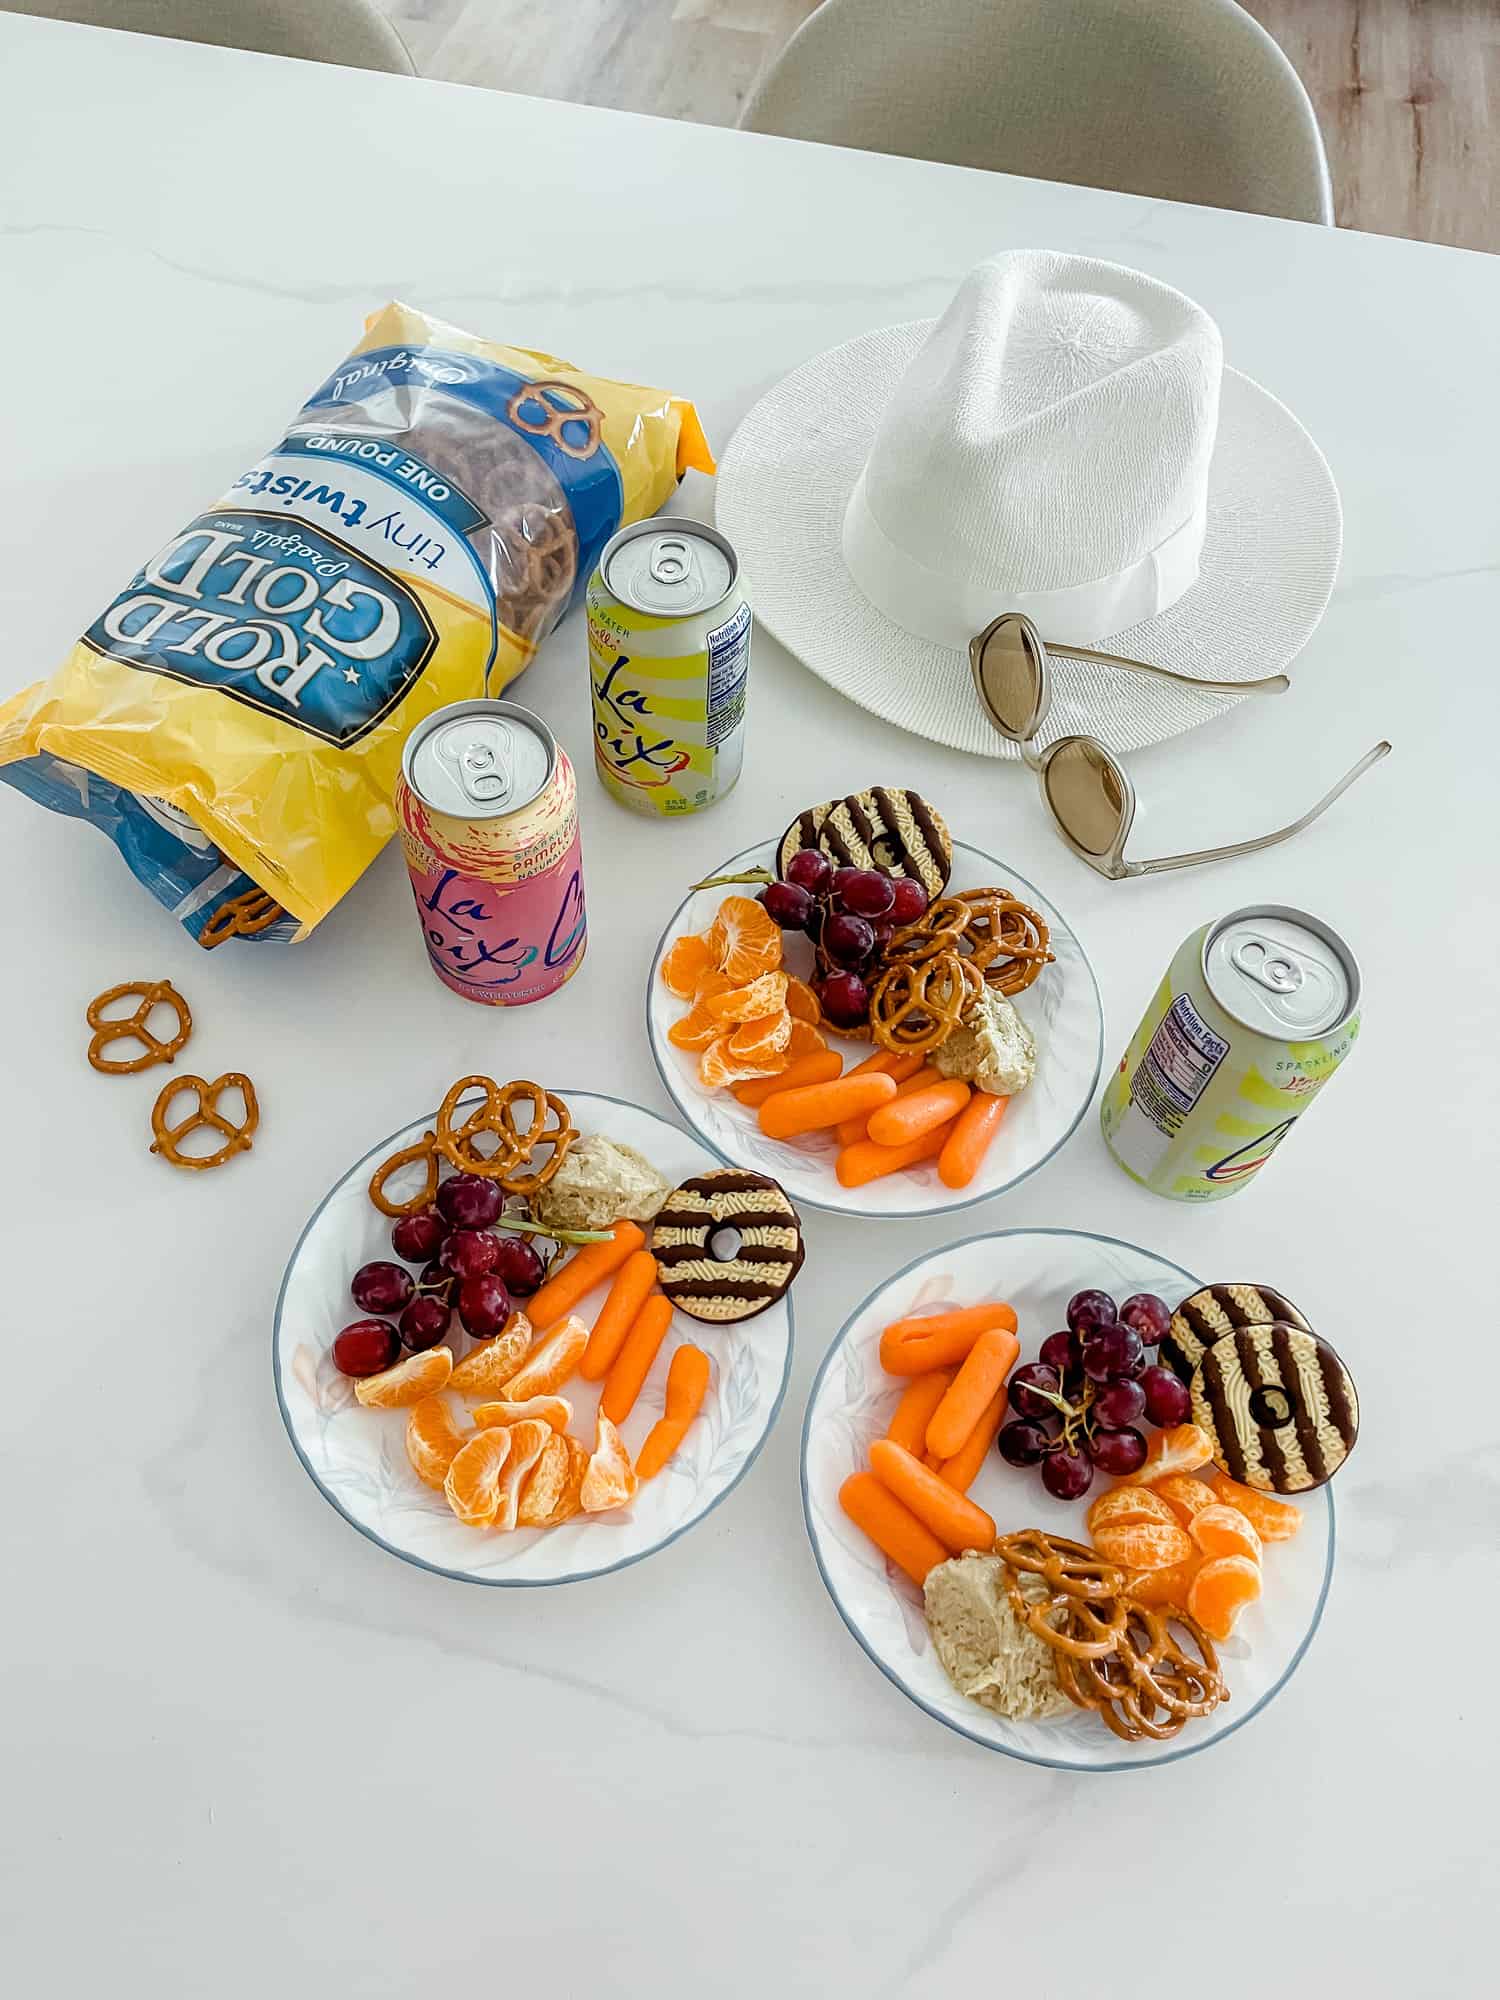 three plates filled with carrots, grapes, pretzels, orange slices, and cookies, a bag of pretzels, three la croix cans, a hat, and sunglasses